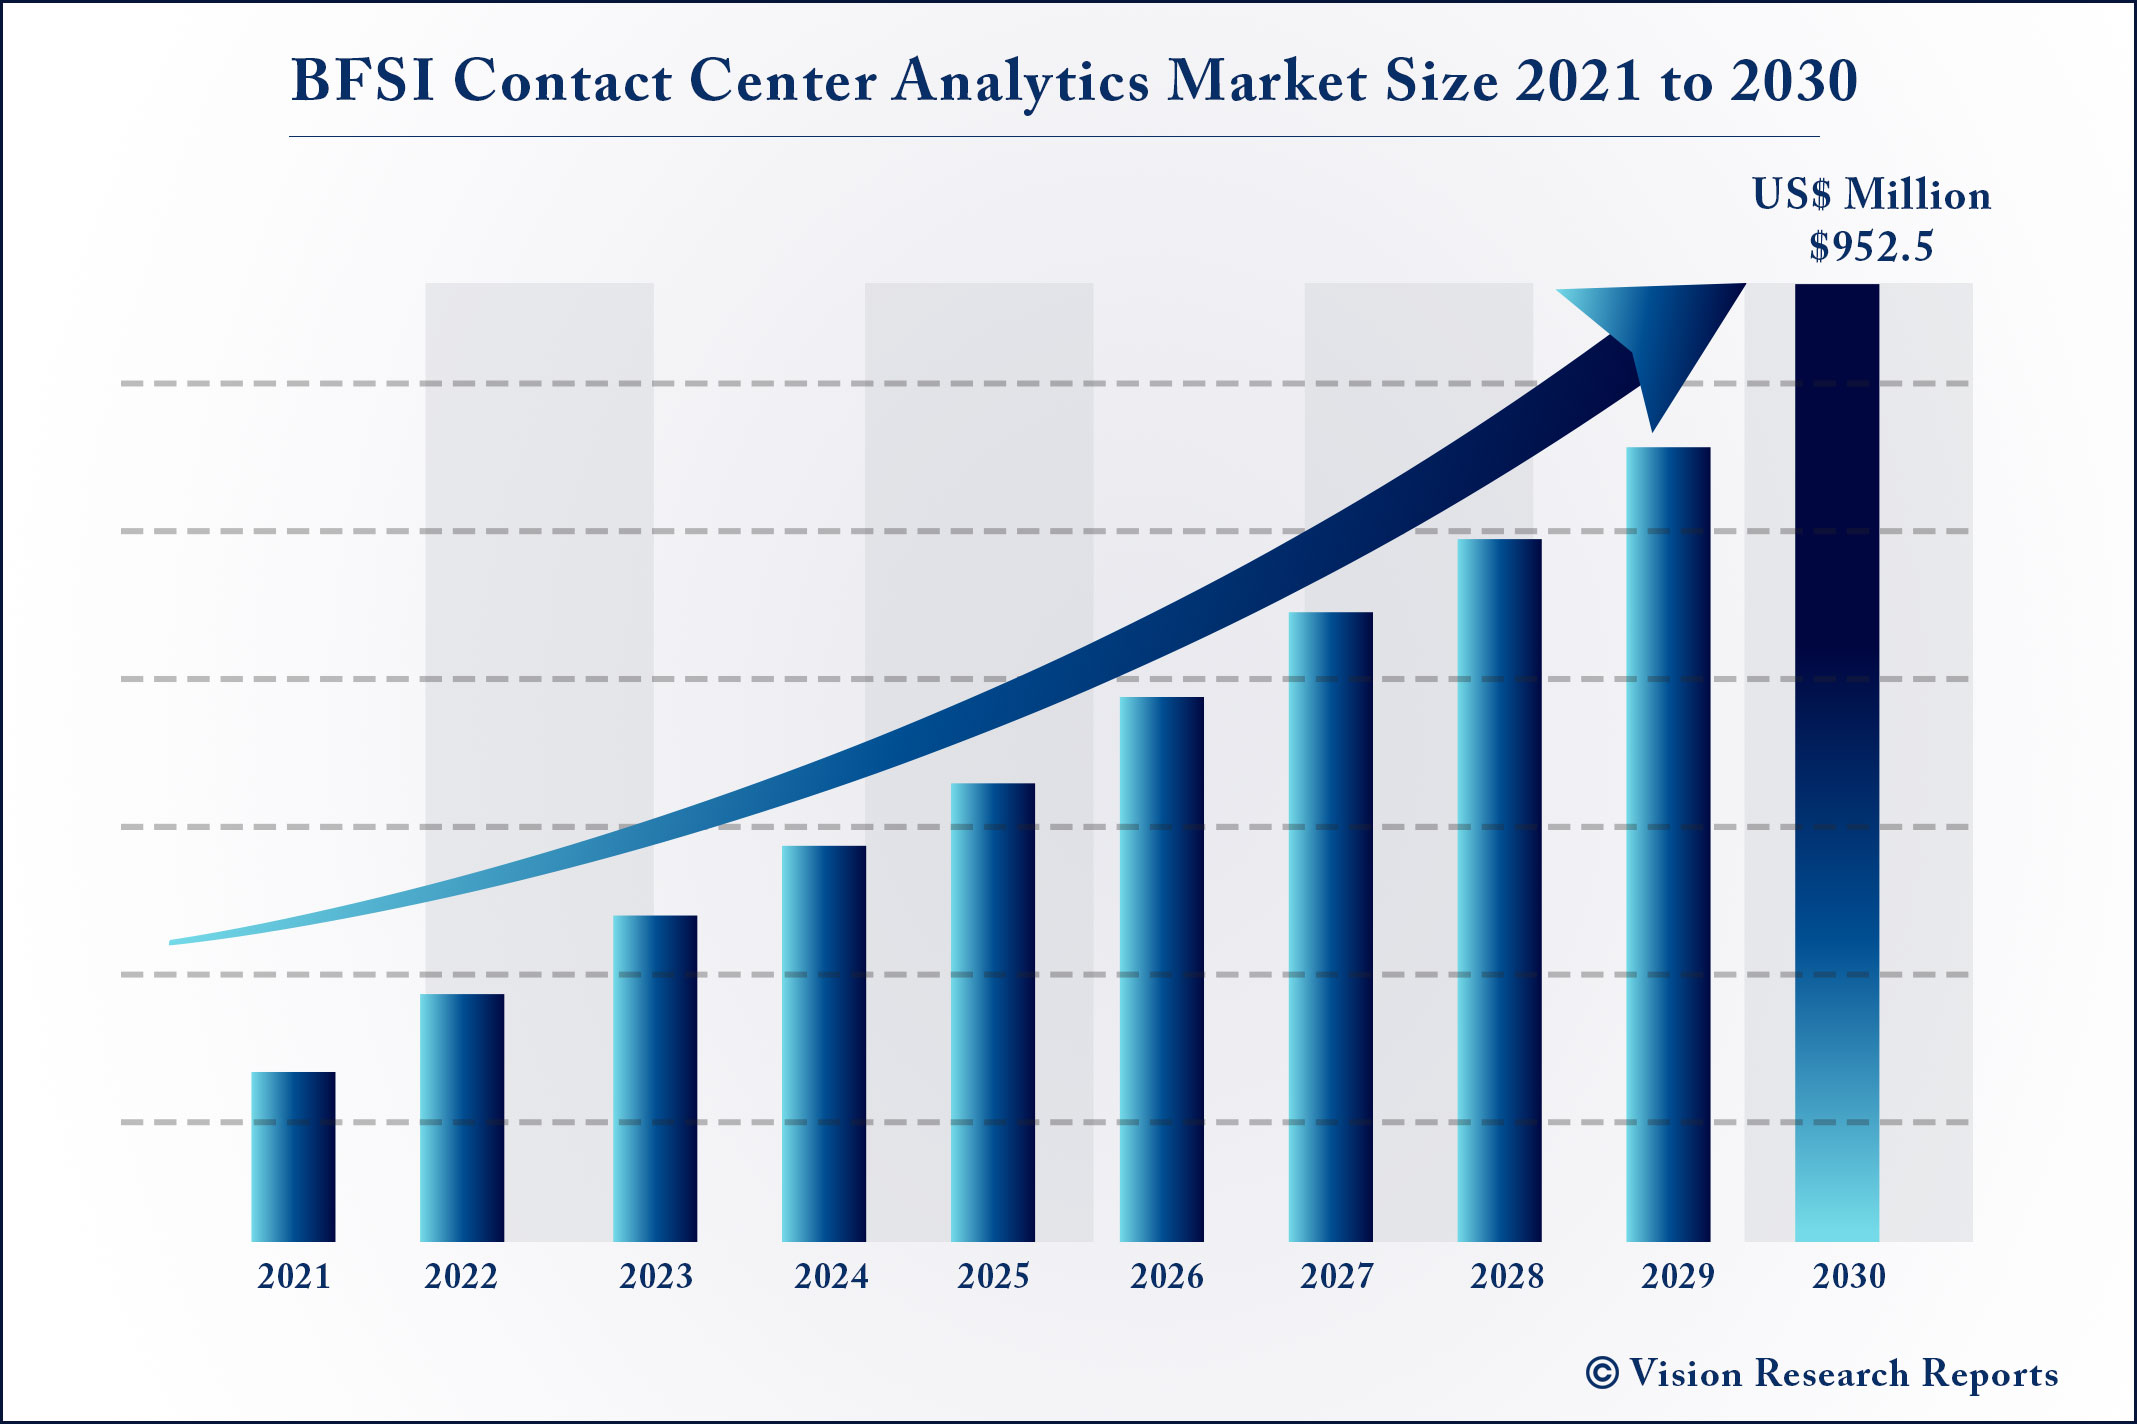 BFSI Contact Center Analytics Market Size 2021 to 2030